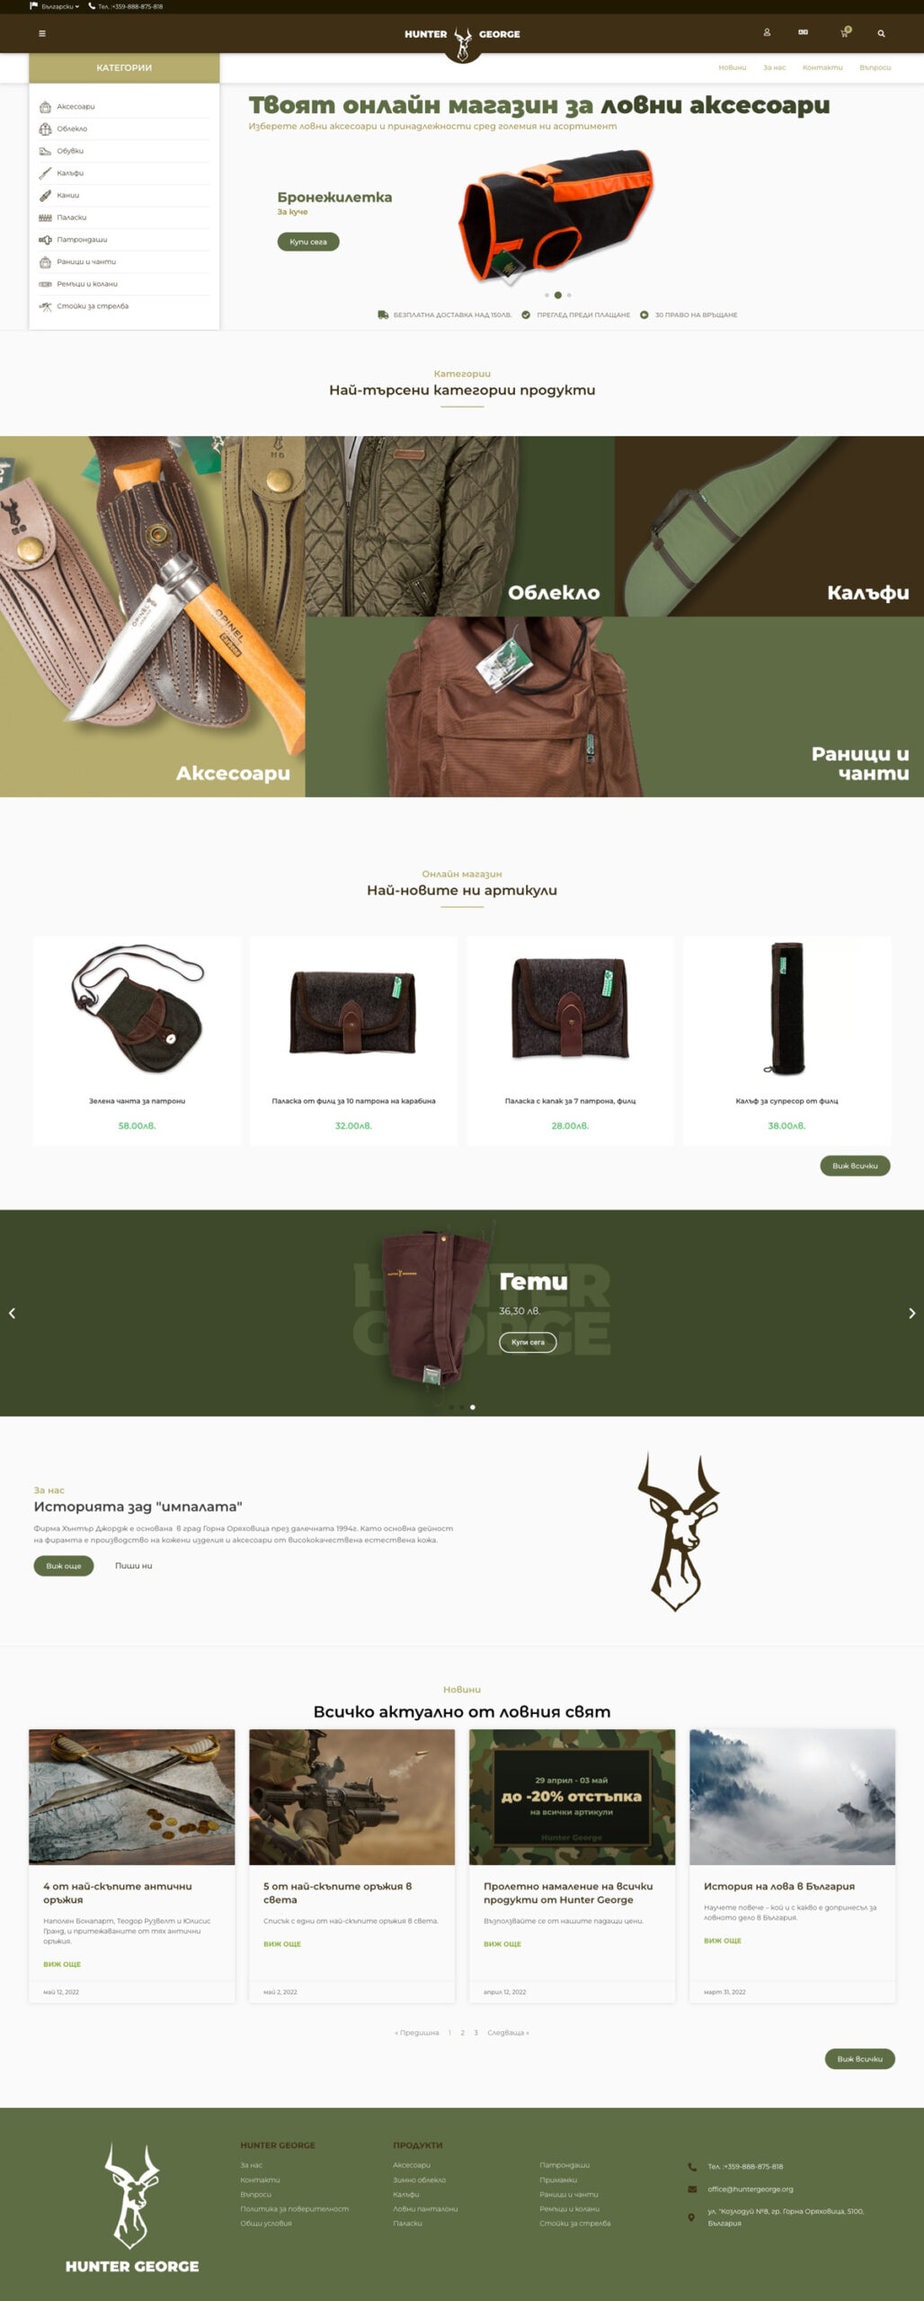 huntergeorge-home-page-design-newwwdesign